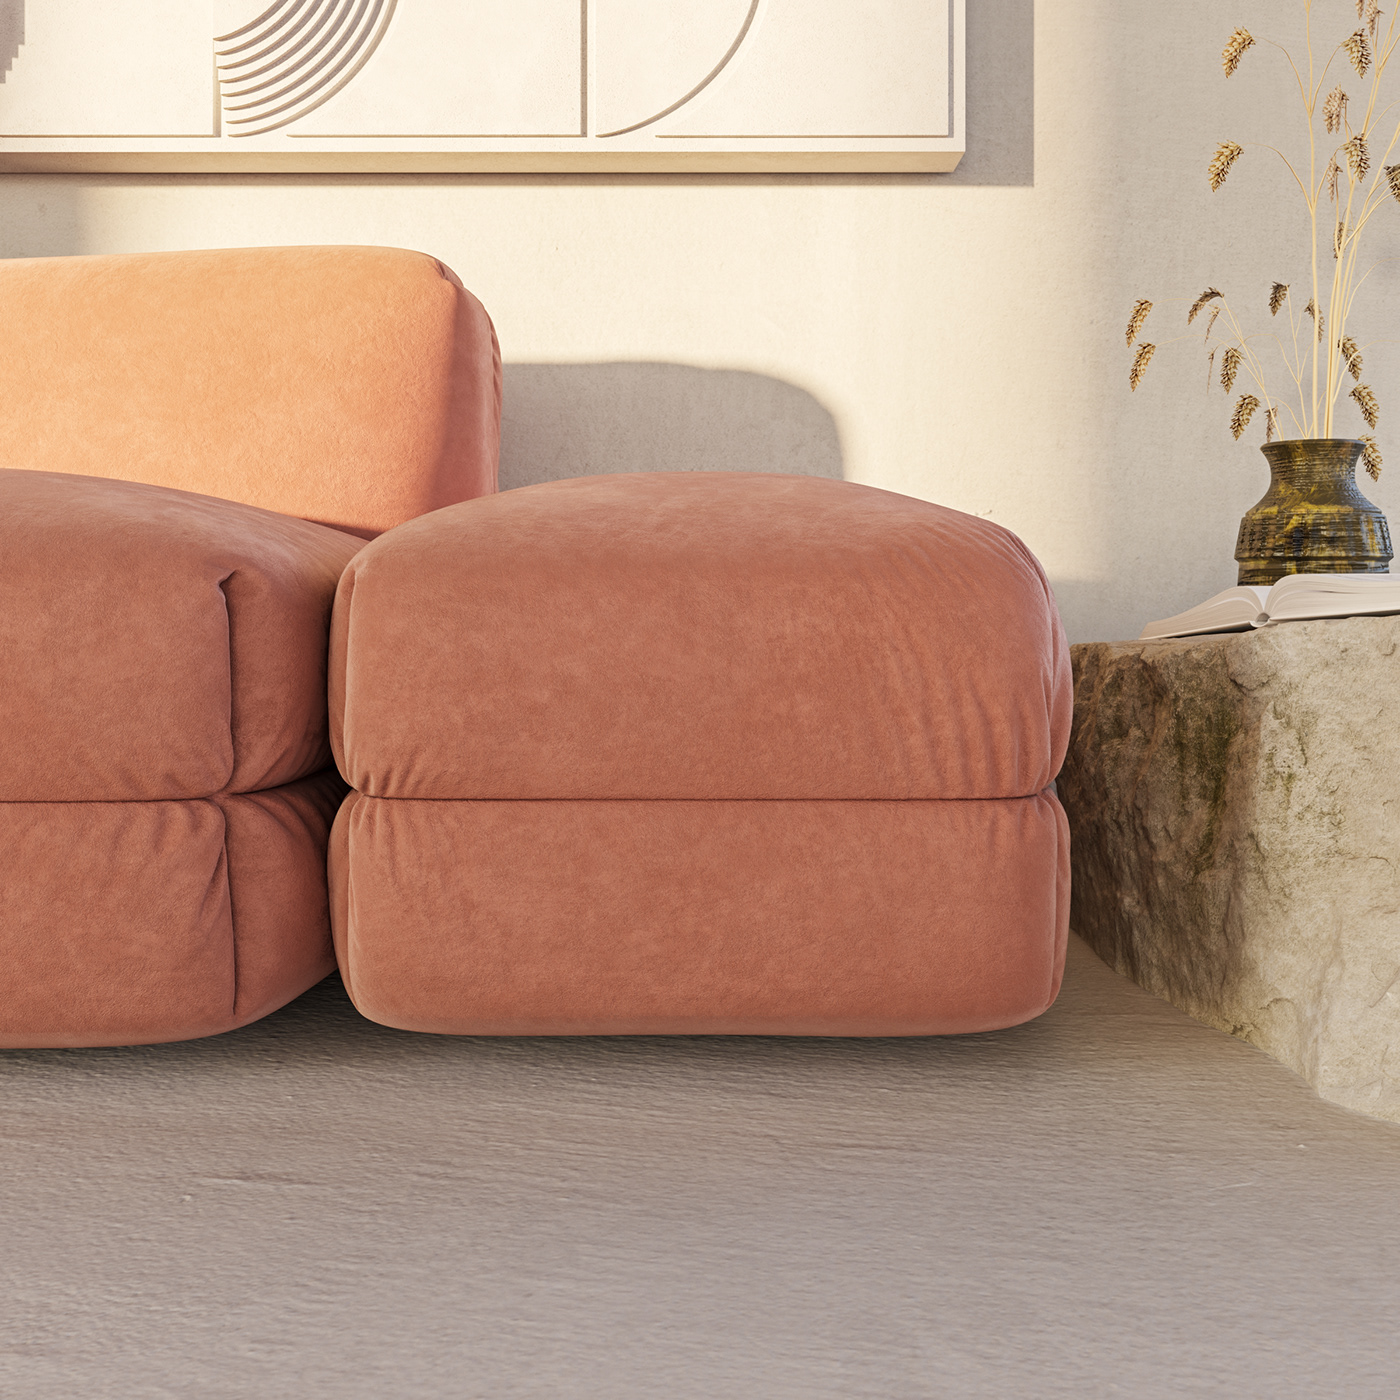 design Digital Art  furniture furniture design  modular objects sofa upholstery visual art